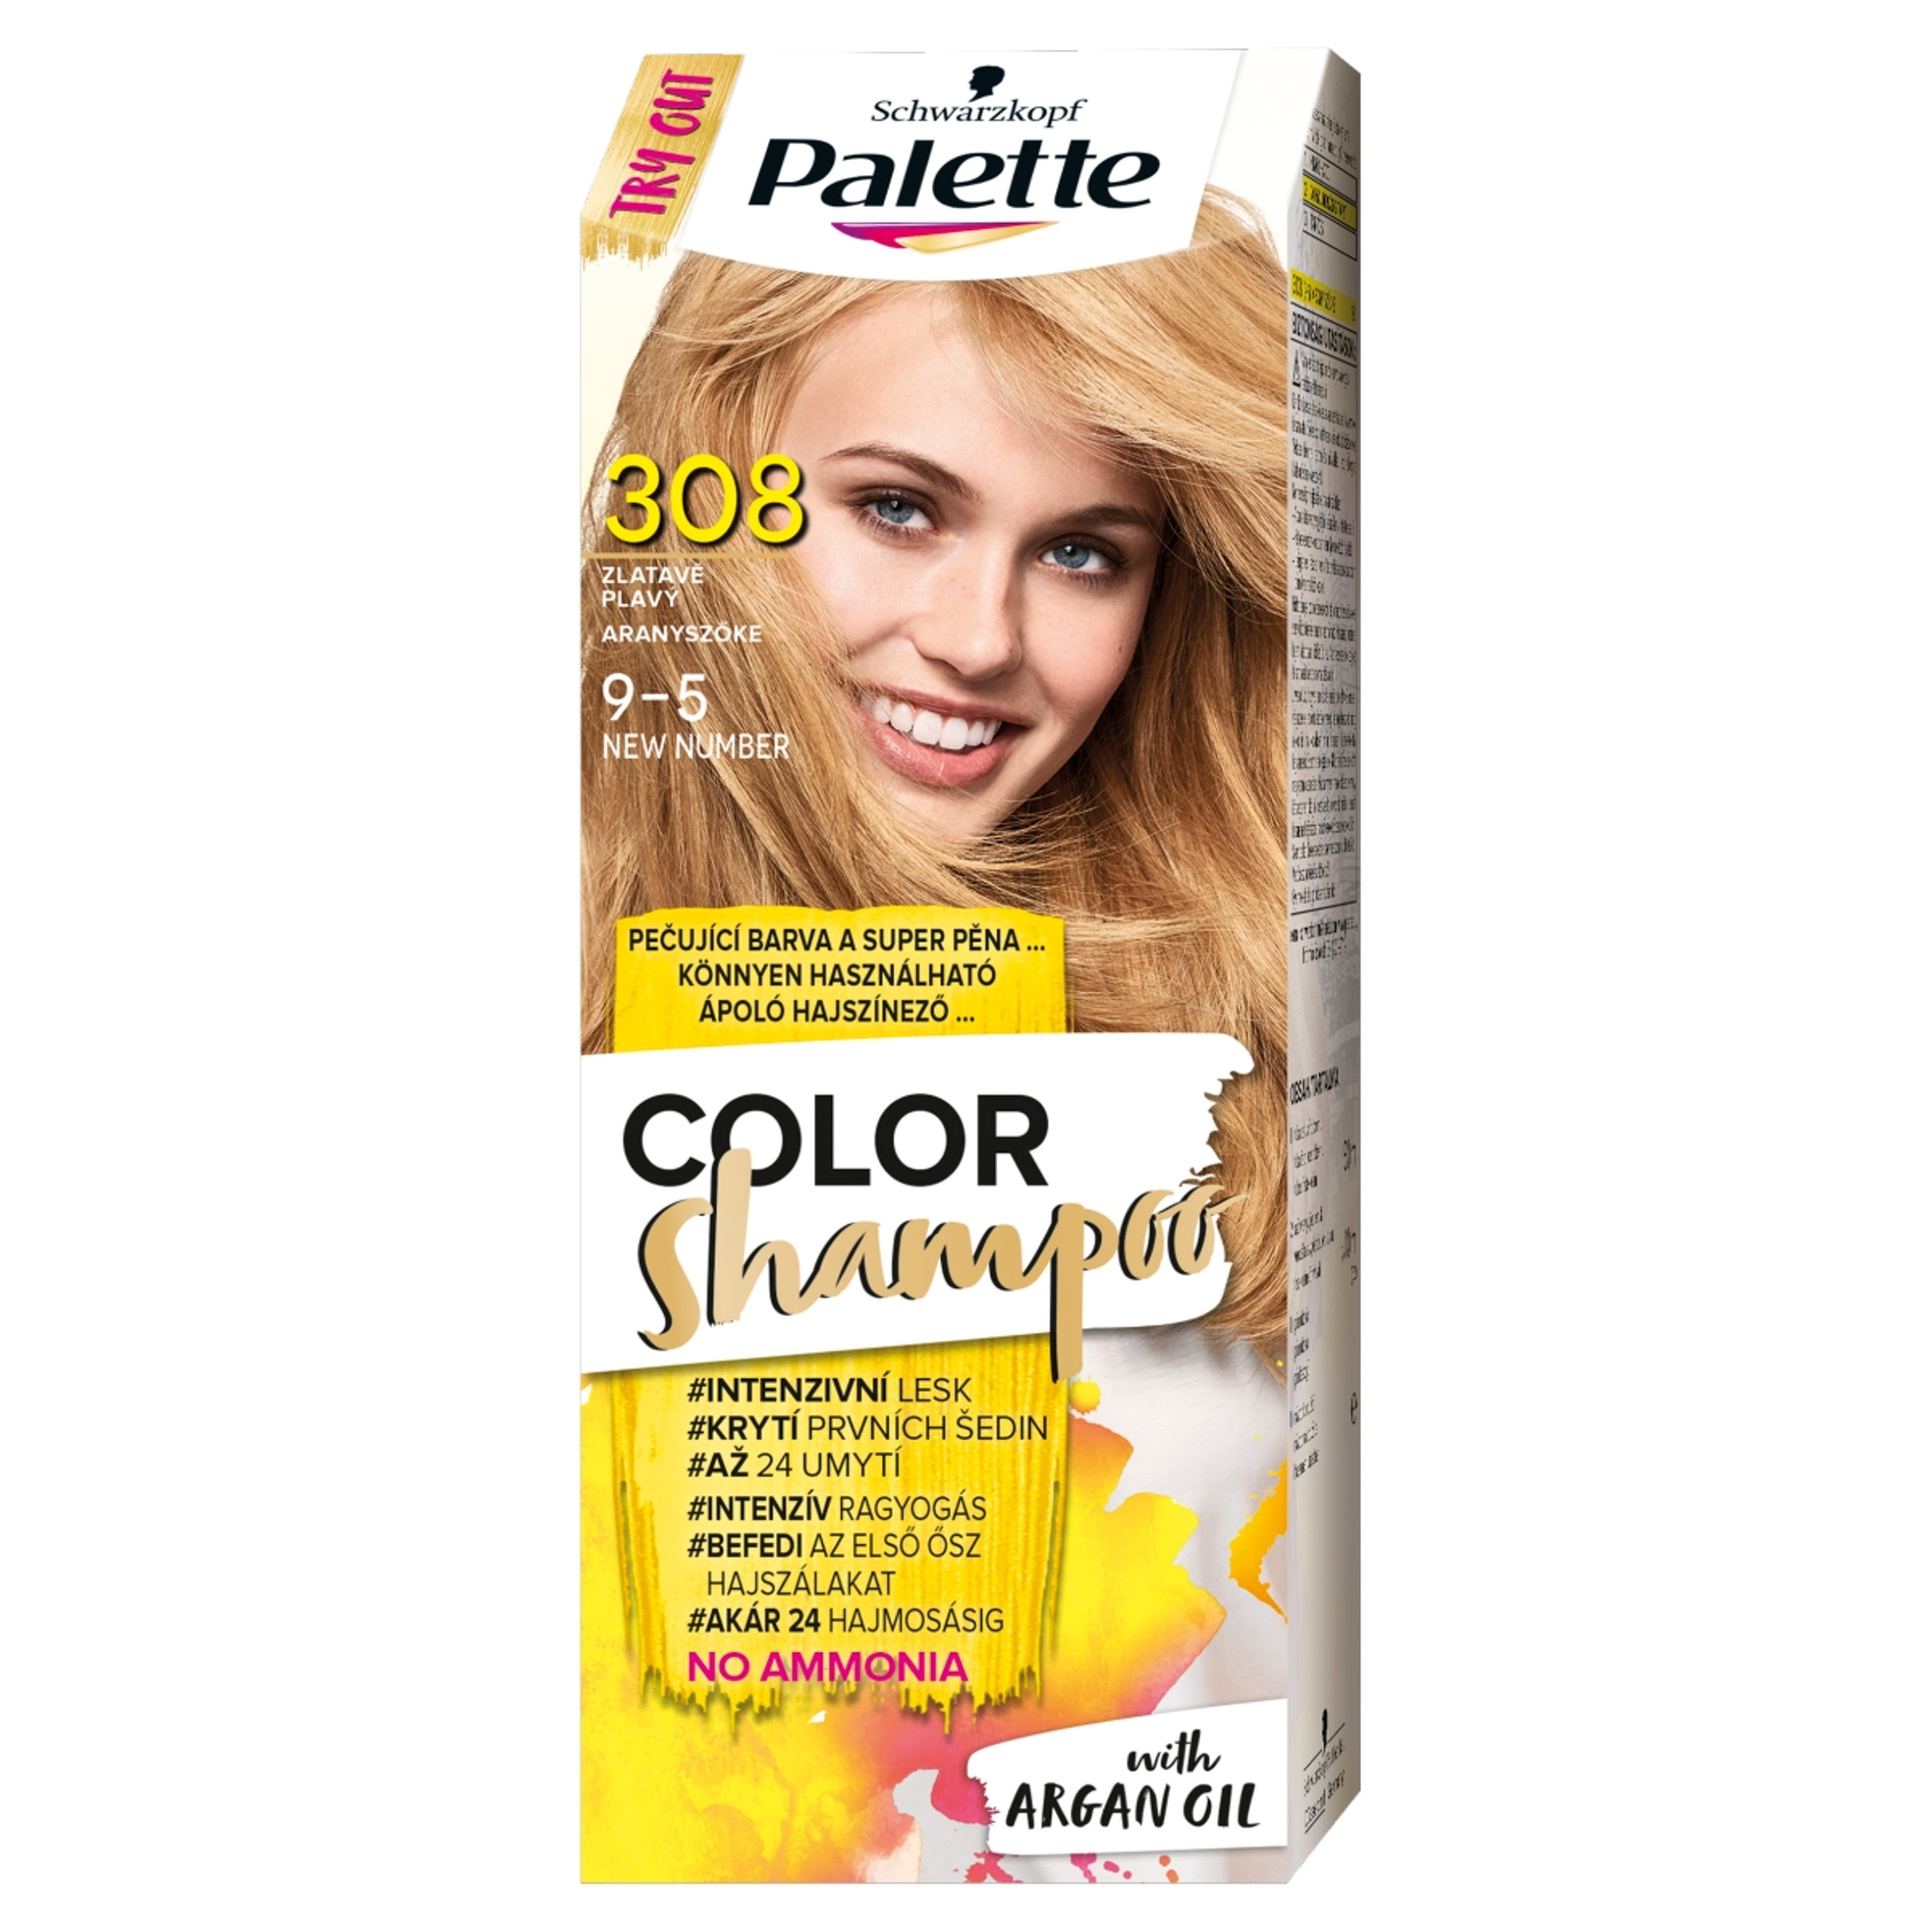 Schwarzkopf Palette Color Shampoo hajfesték 308 arnyszőke - 1 db